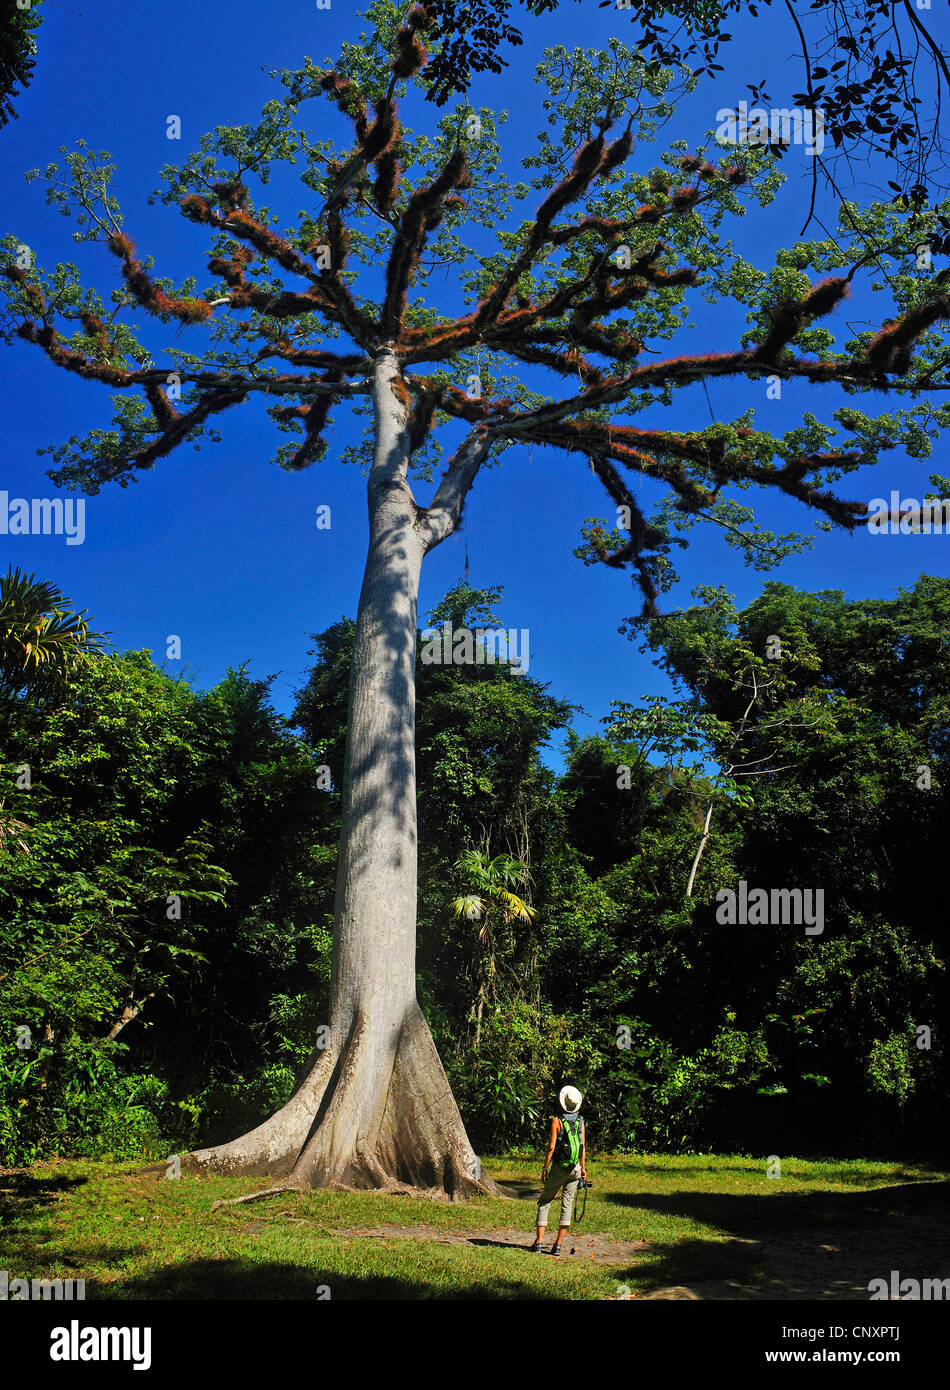 Ebano (Ceiba pentandra), albero sacro in legno tirak, Guatemala Foto stock  - Alamy